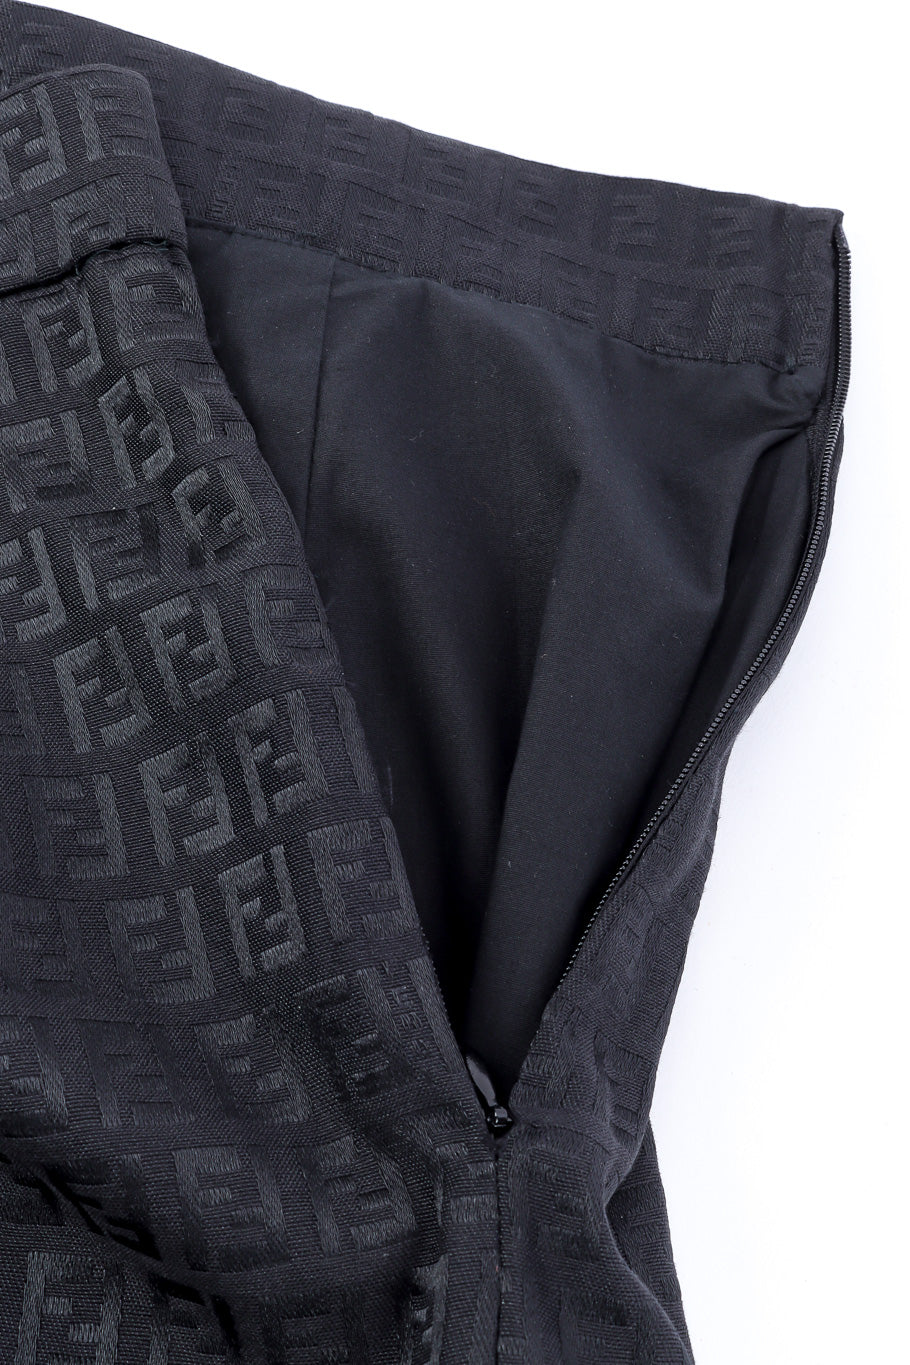 Fendi zucca monogram pencil skirt side zipper closure @recessla